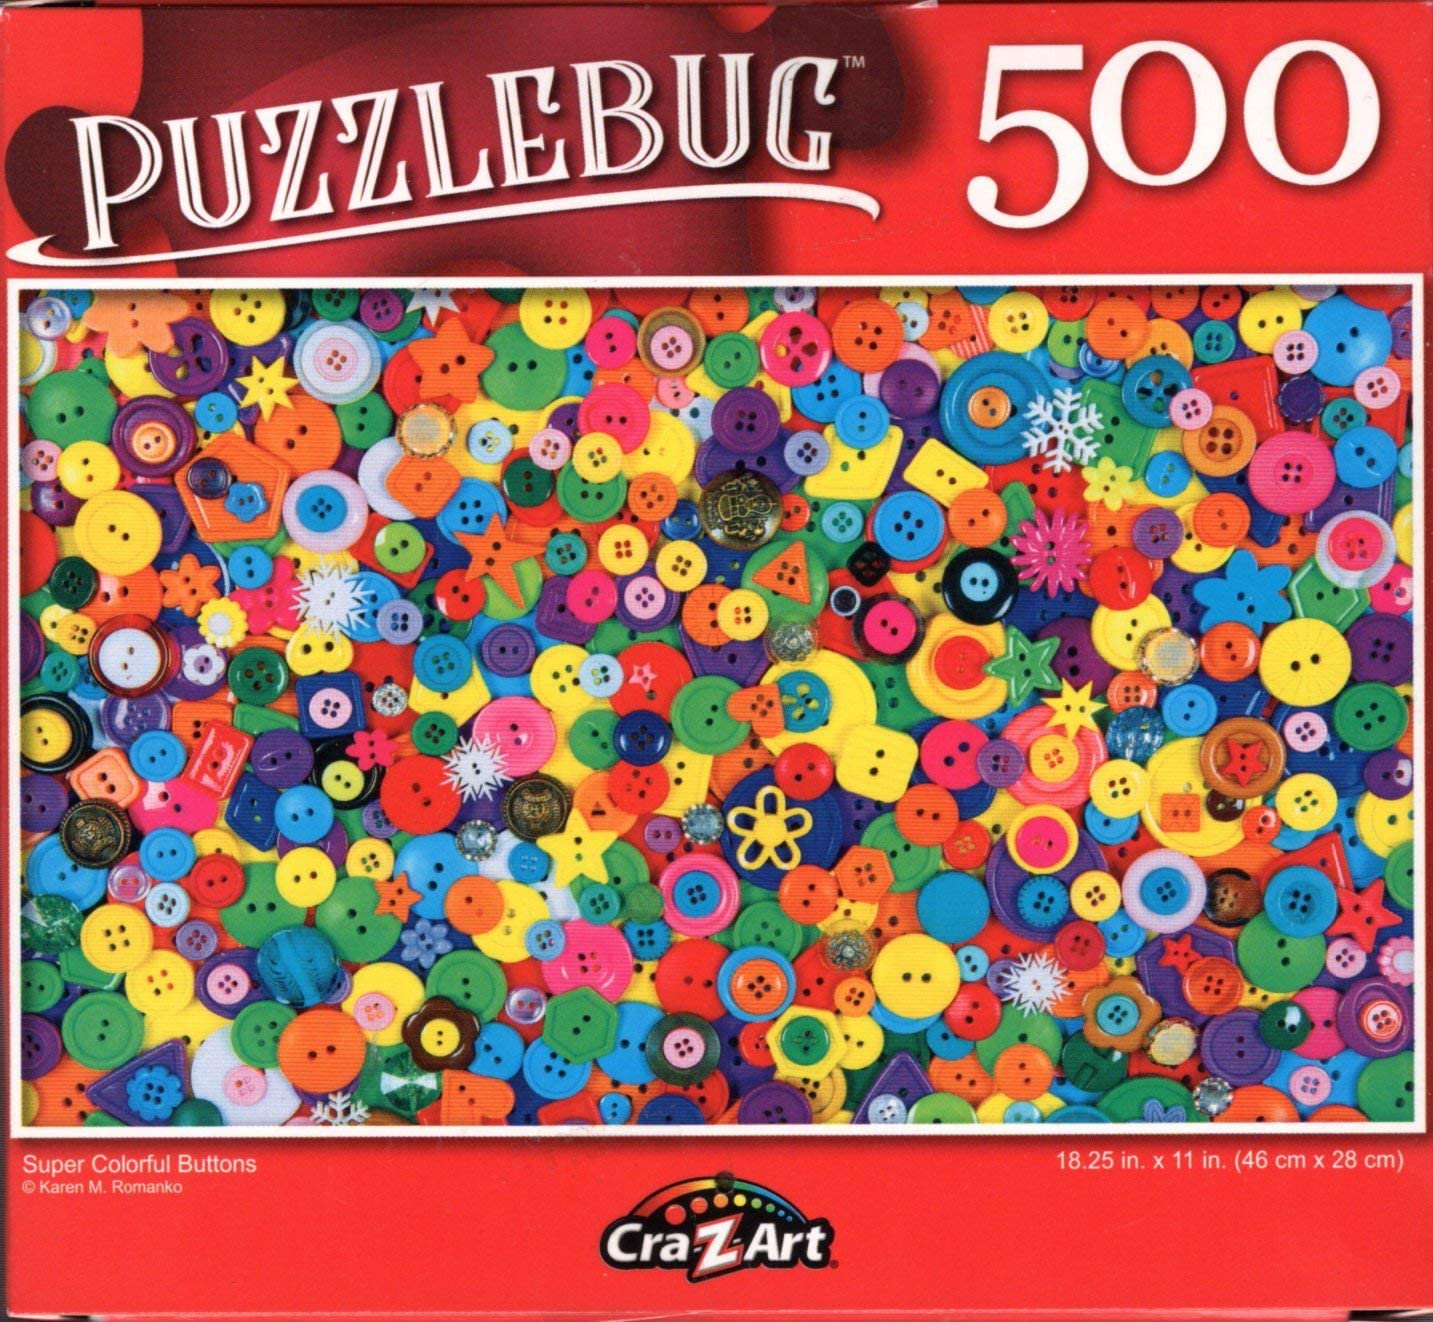 Super Colorful Buttons - 500 Pieces Jigsaw Puzzle